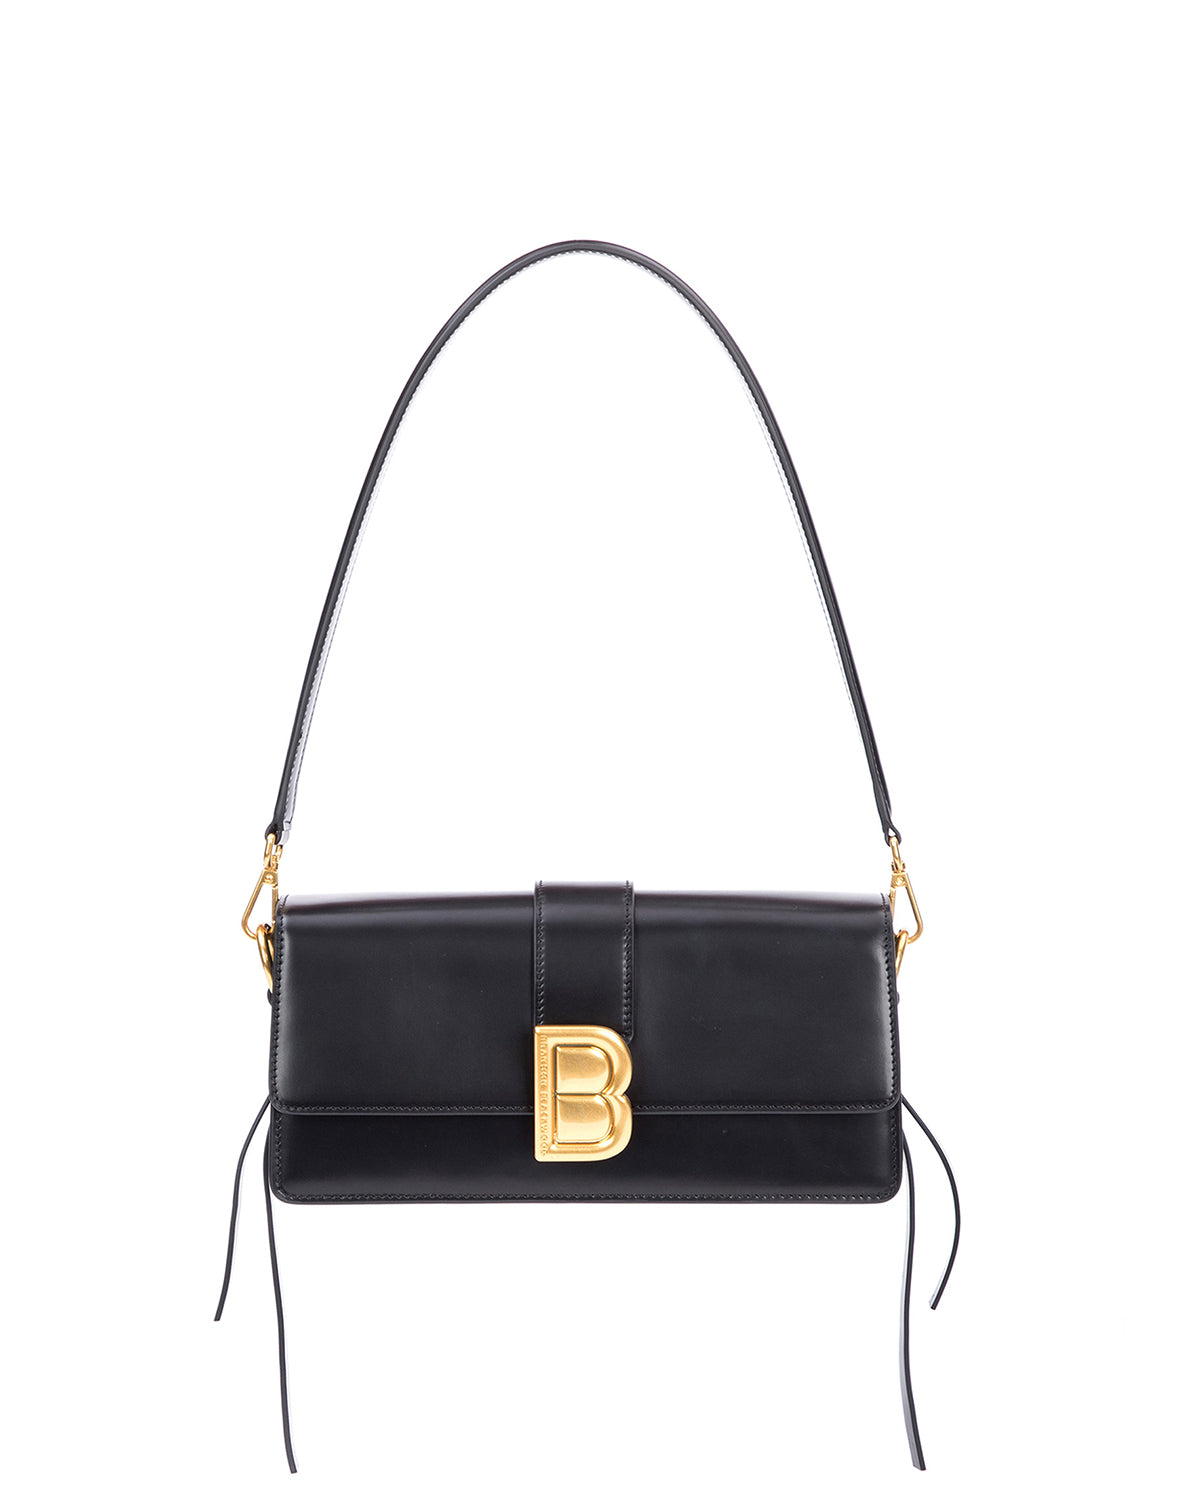 Brandon Blackwood New York - Nia Bag - Black Hard Leather w/ Brass Hardware